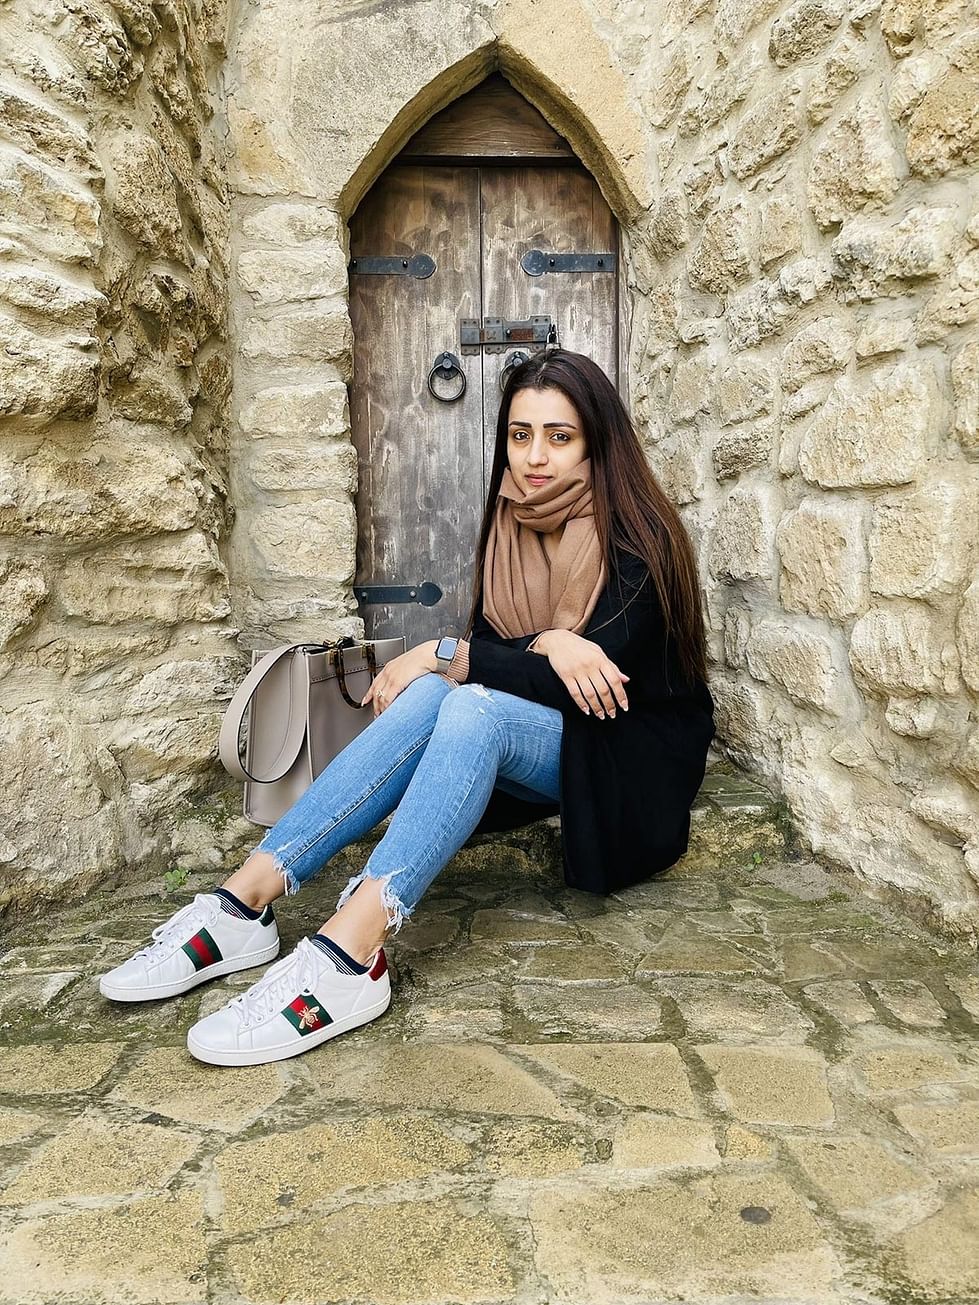 Trisha's ultra cute photos from 'Vidaamuyarchi' Azerbaijan locations stun fans